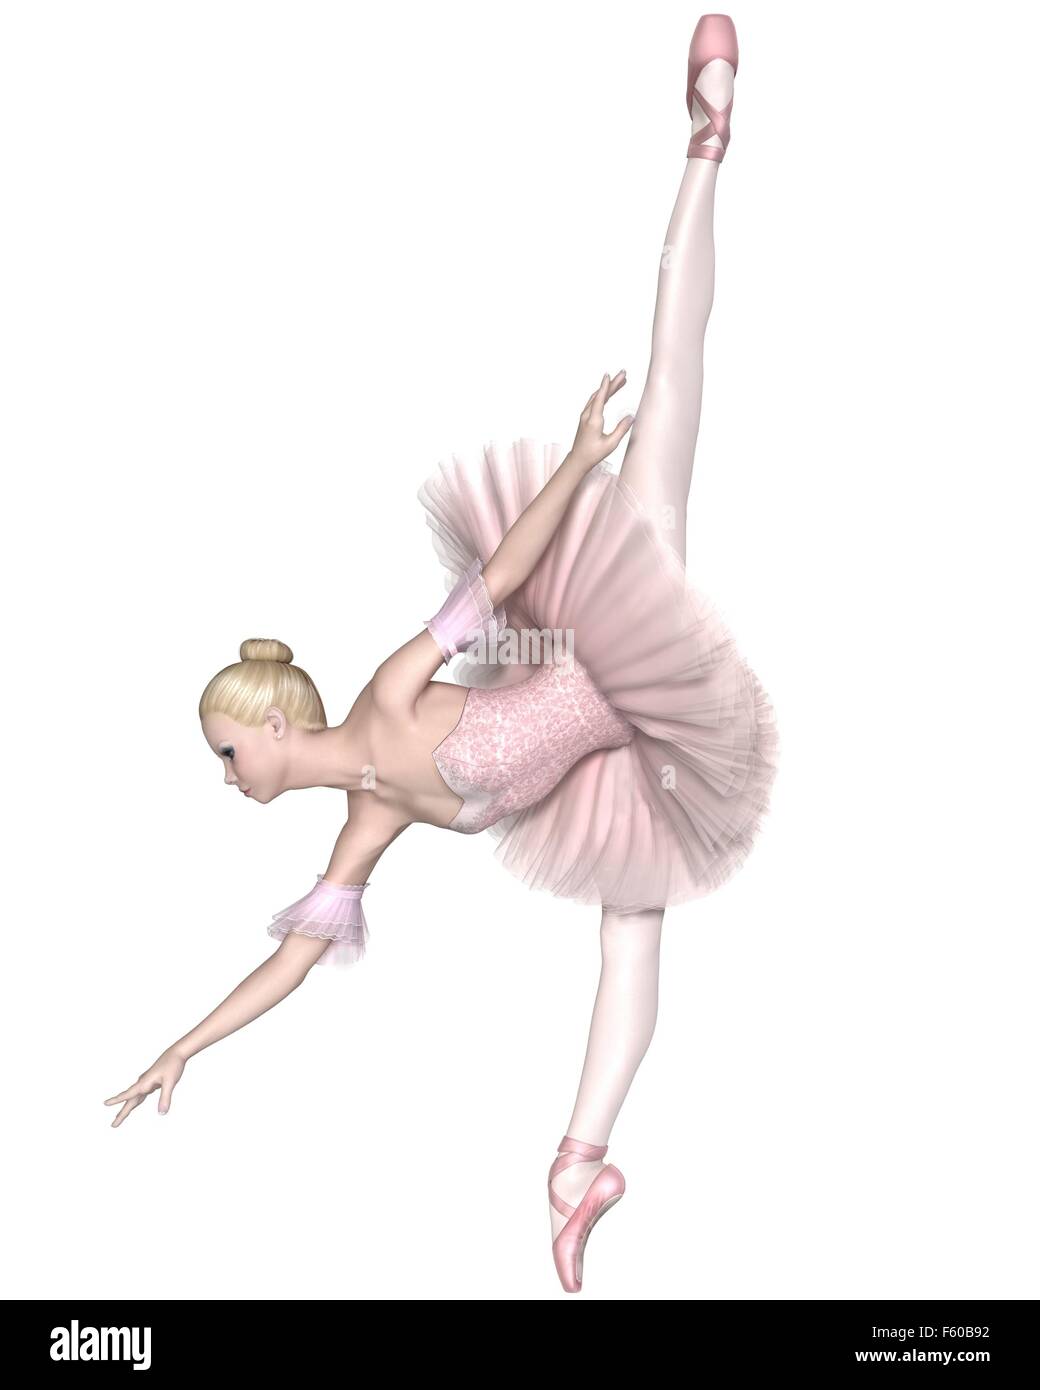 Ballerina in rosa Tutu - Arabesque Penché Foto stock - Alamy